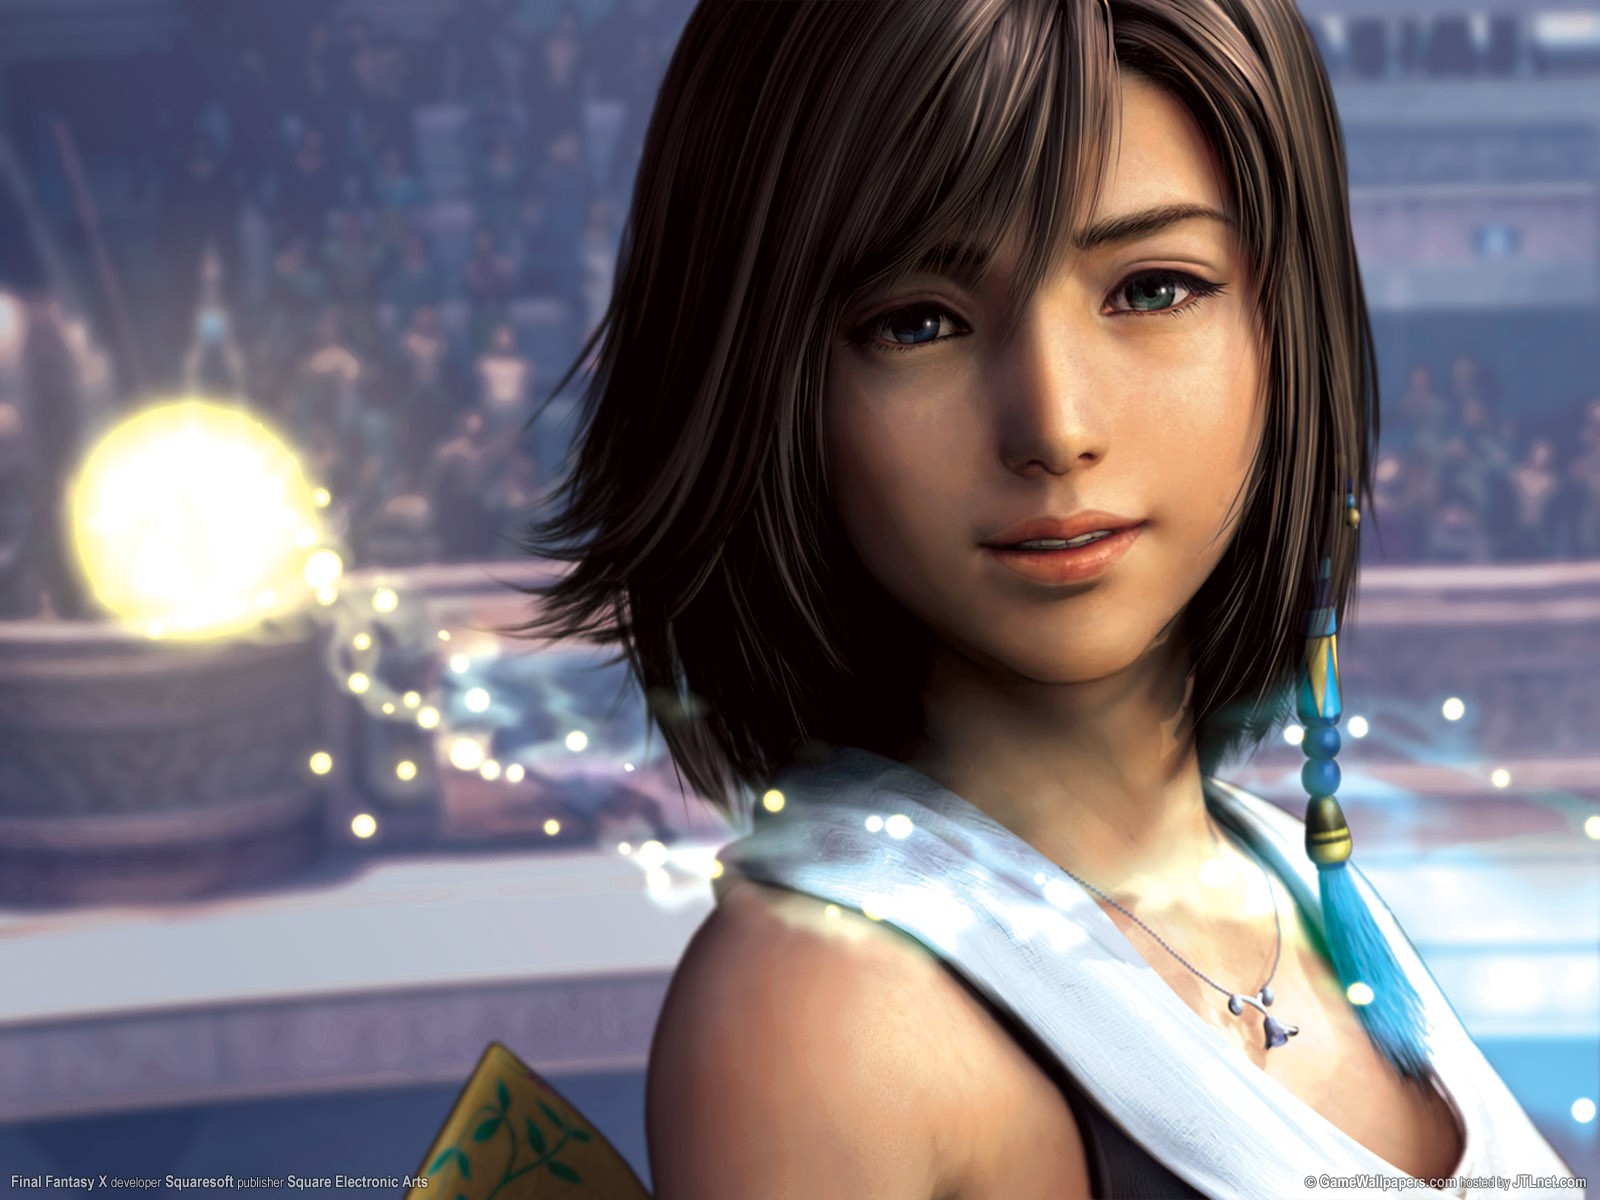 Final Fantasy X ファイナルファンタジー10 の美女キャラクター壁紙 画像まとめ Naver まとめ